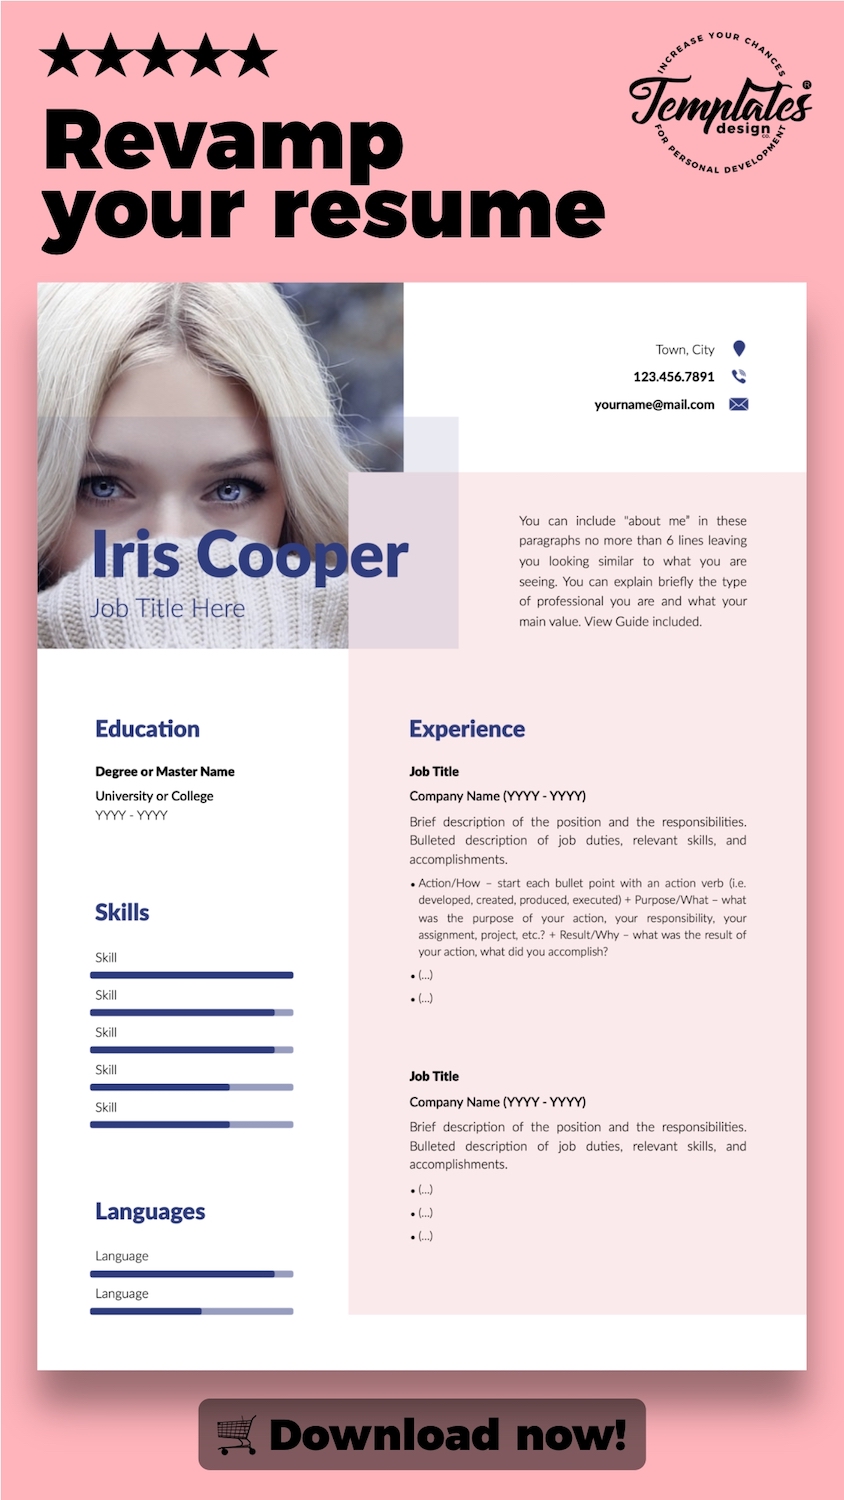 Iris Cooper Modern Resume CV Template Bundle pinterest image.